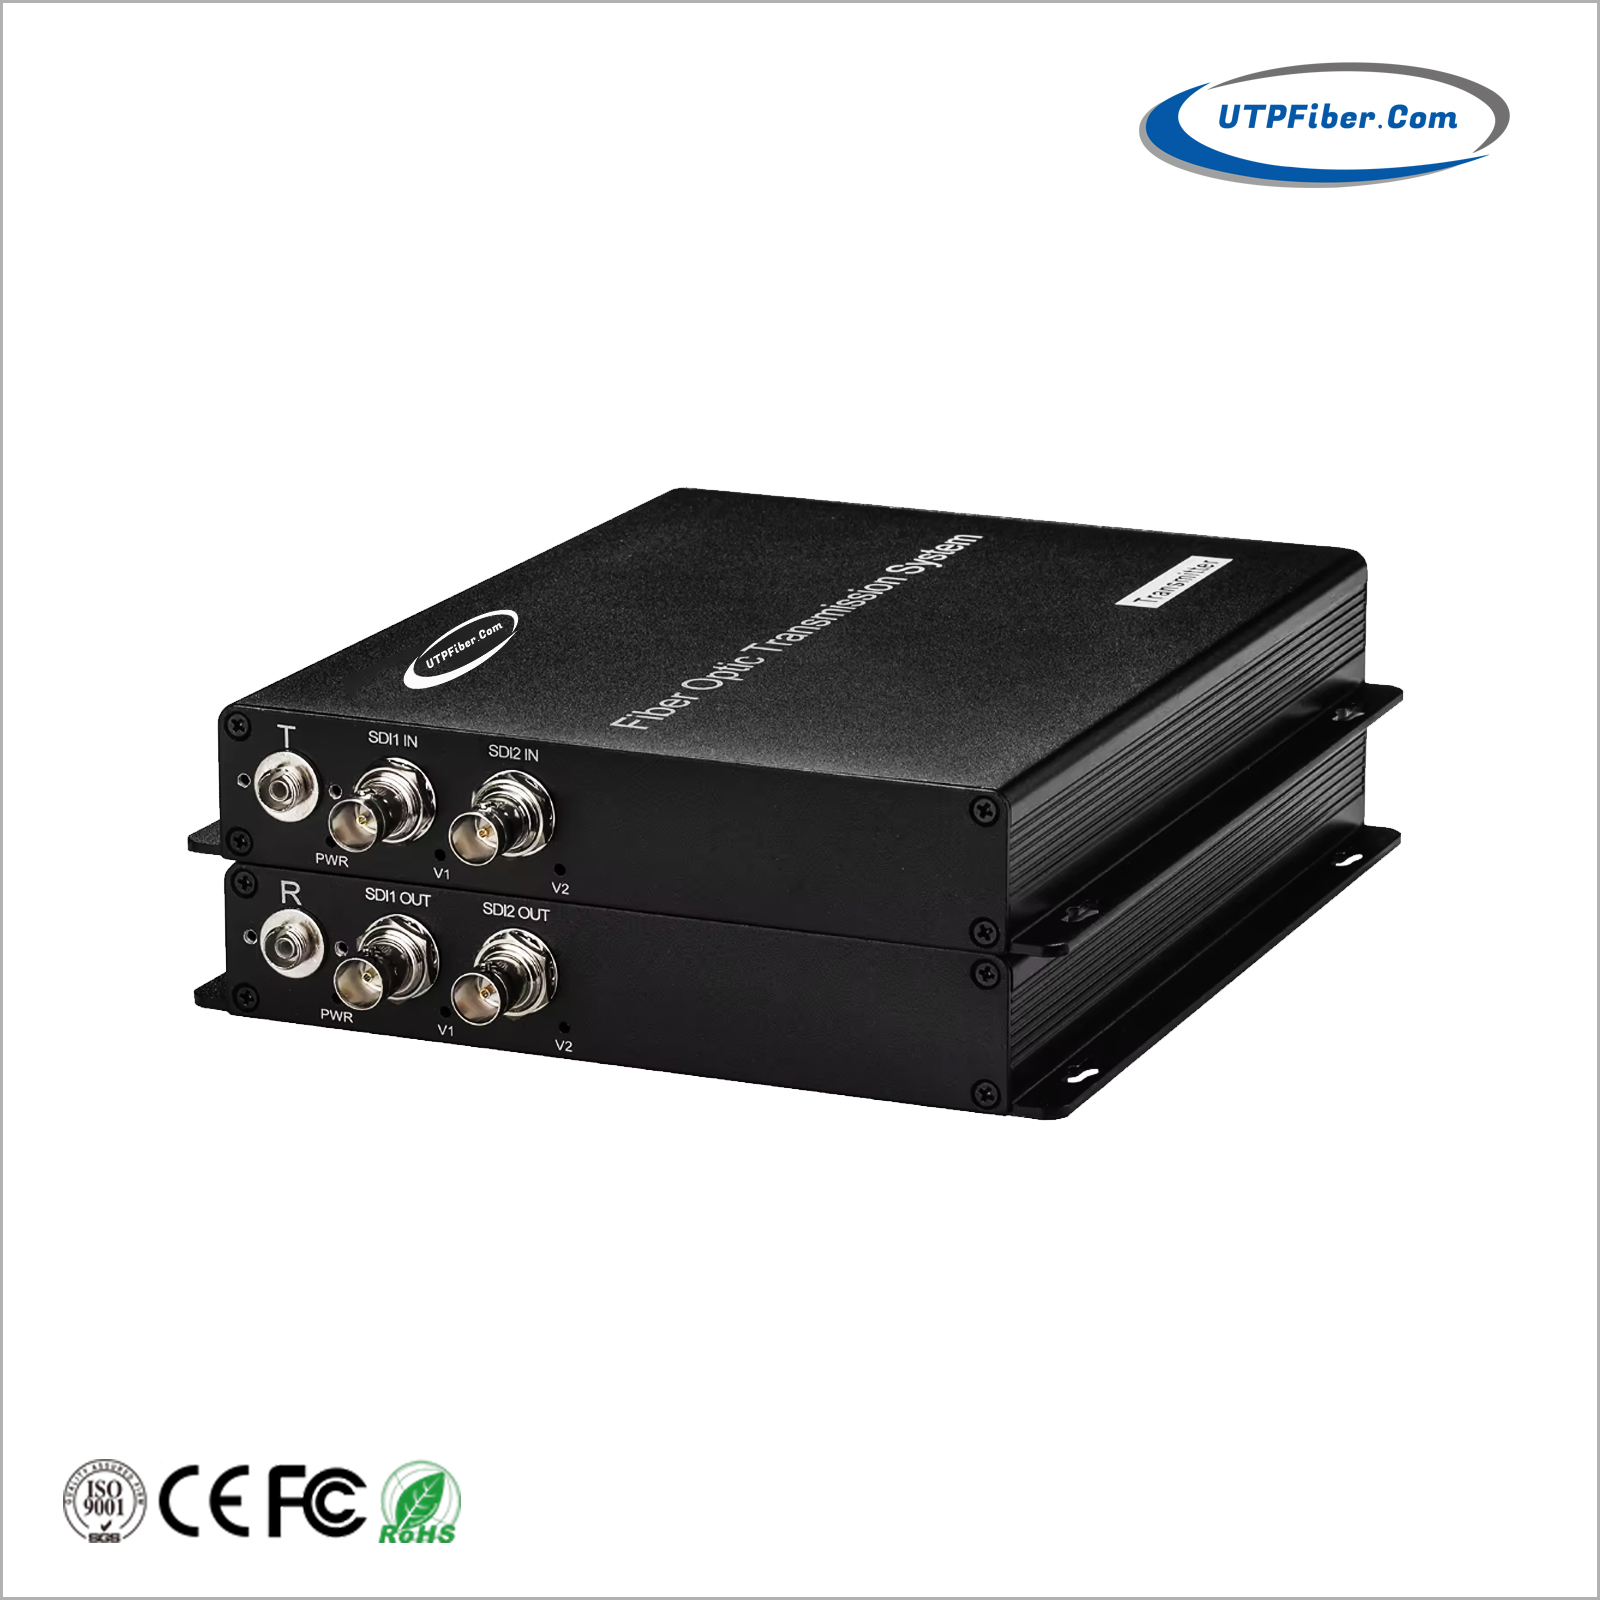 2-Channel 3G/HD/SD-SDI over 1 Fiber Optic Extender, Broadcast Quality, Single-Mode up 20Km